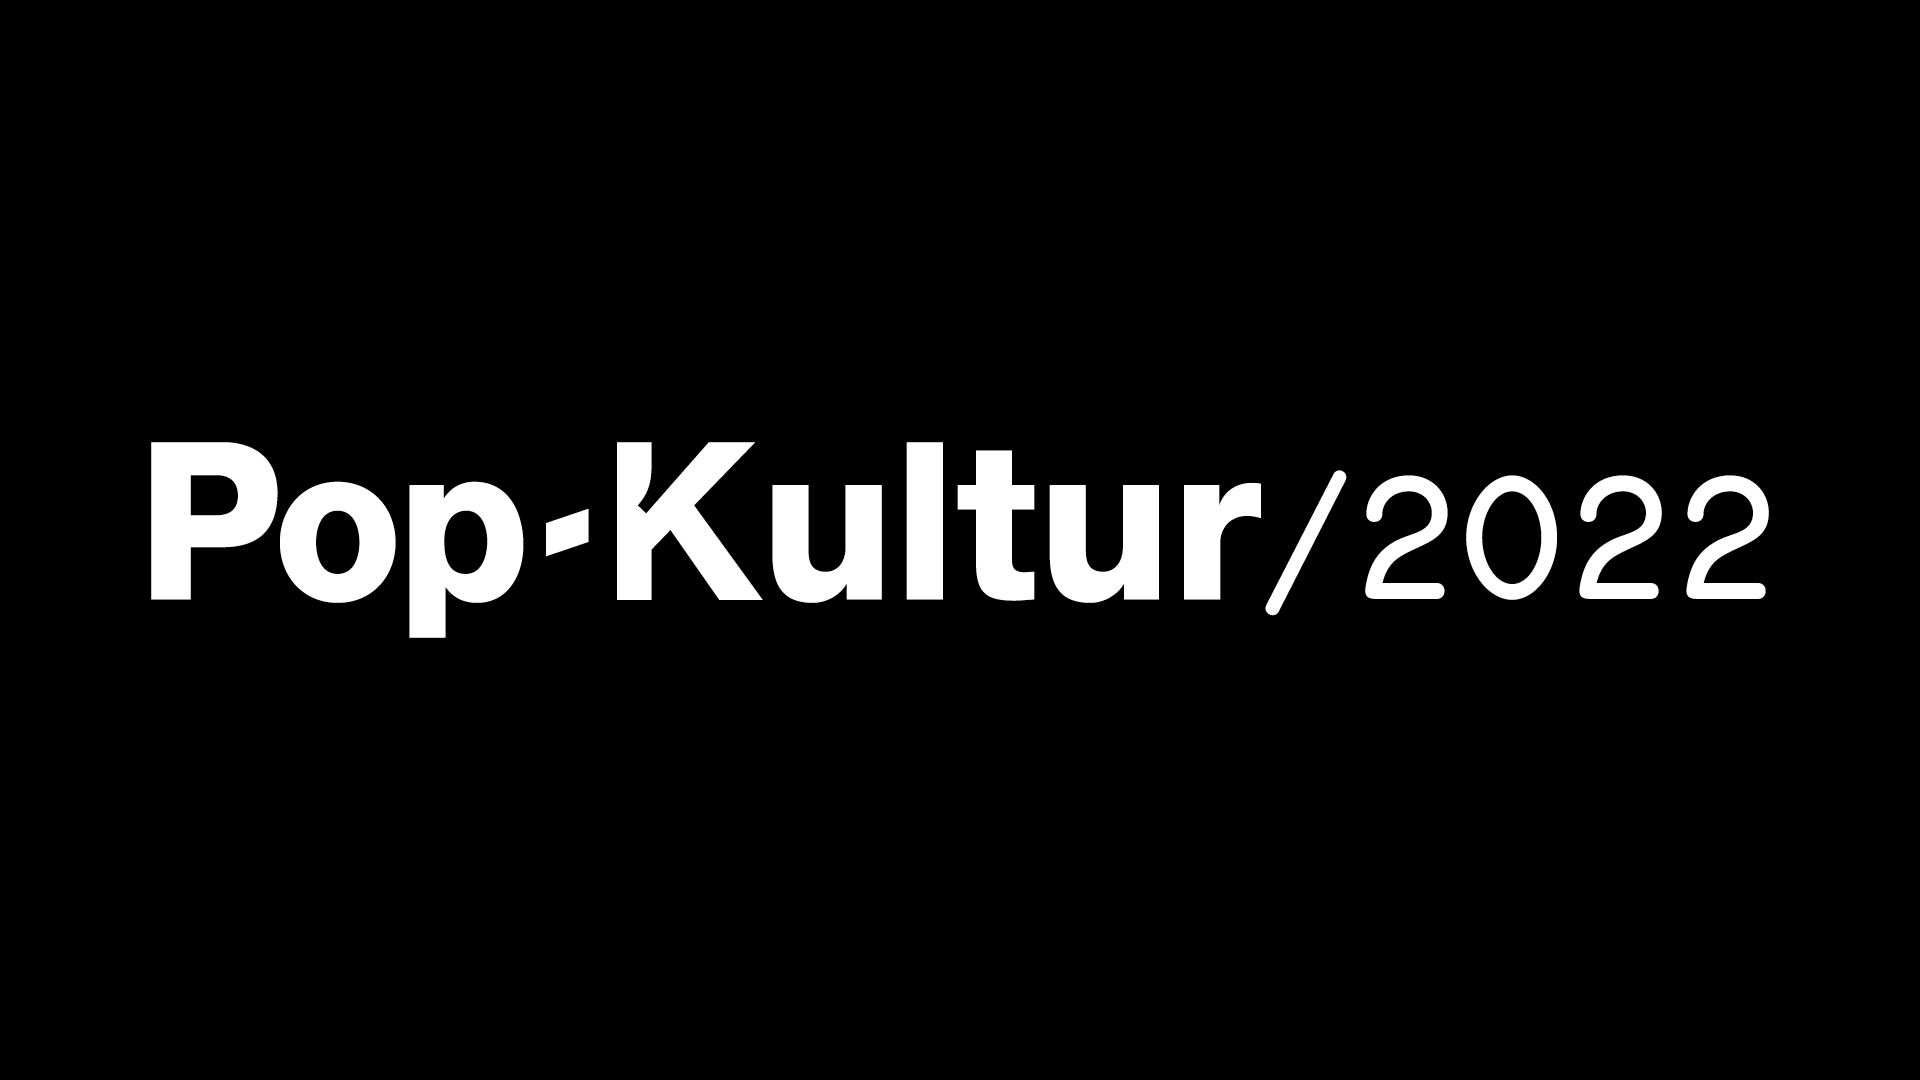 Pop-Kultur 2022 Logo white black background